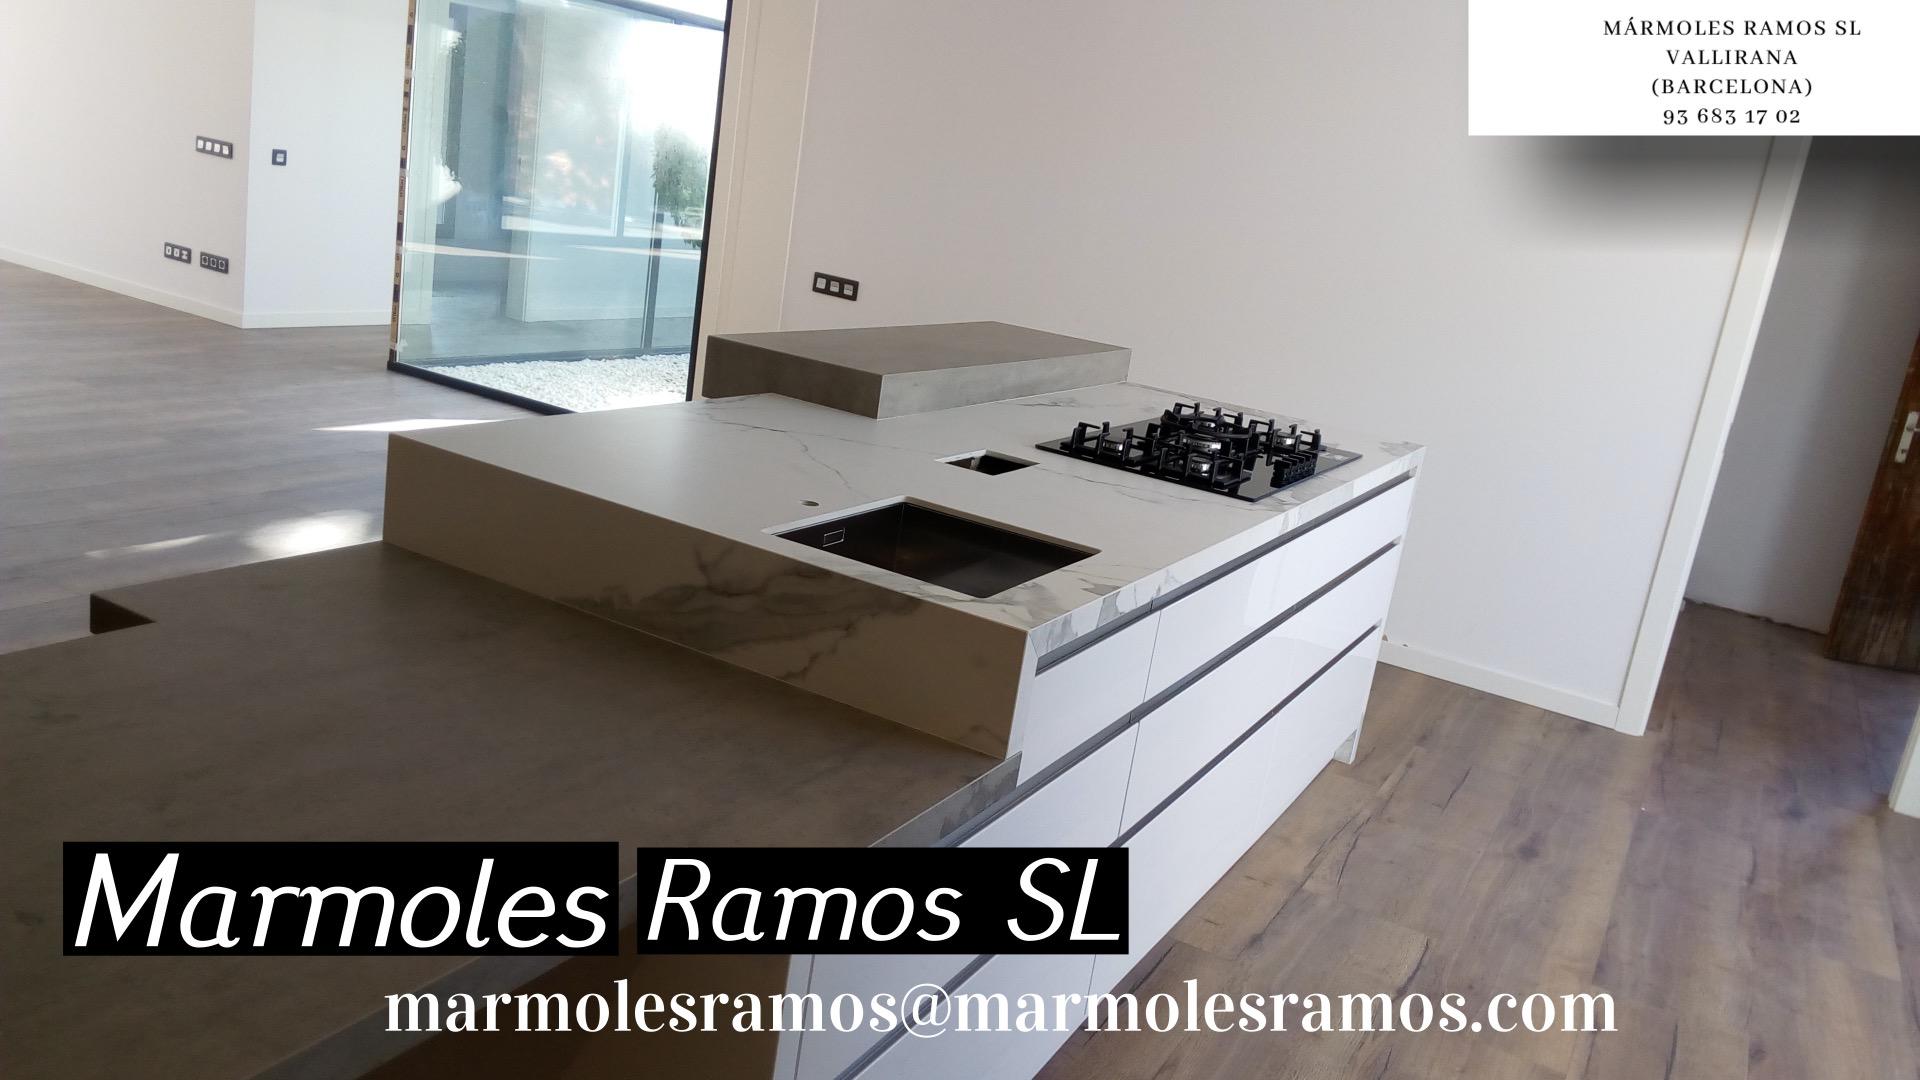 Images Marmoles Ramos S.L.